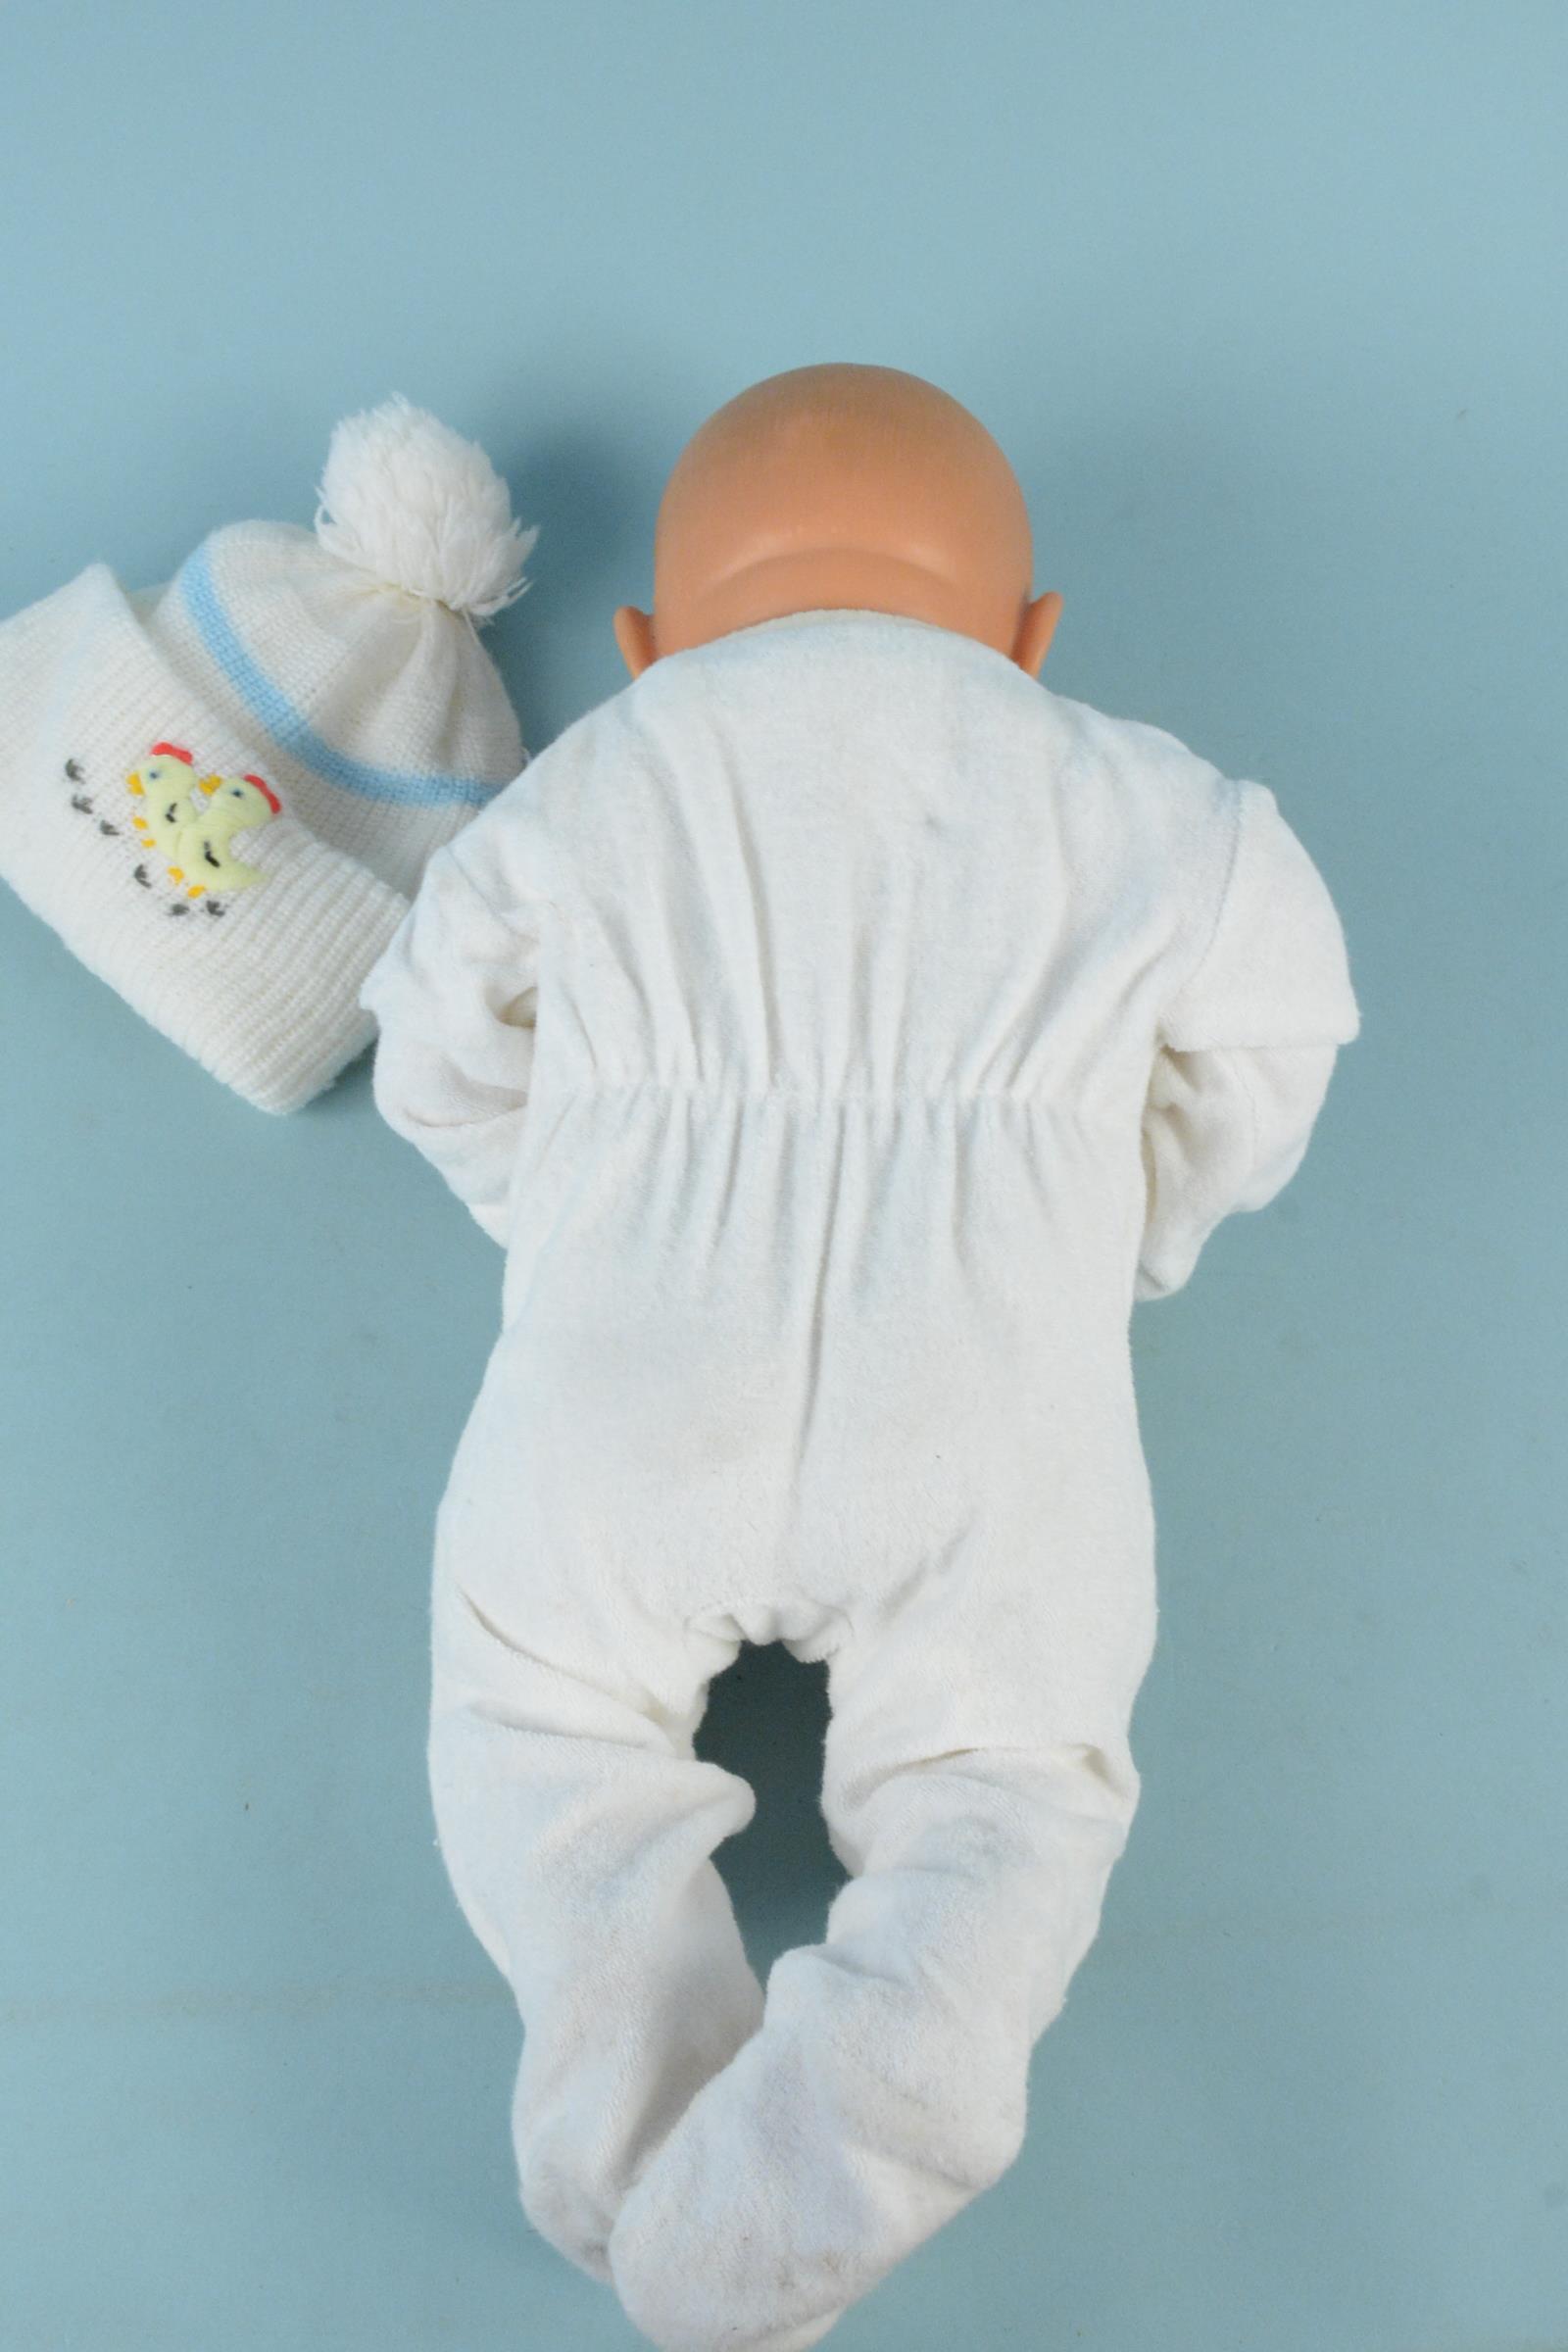 An Effe Italian anatomically correct baby doll - Image 2 of 3